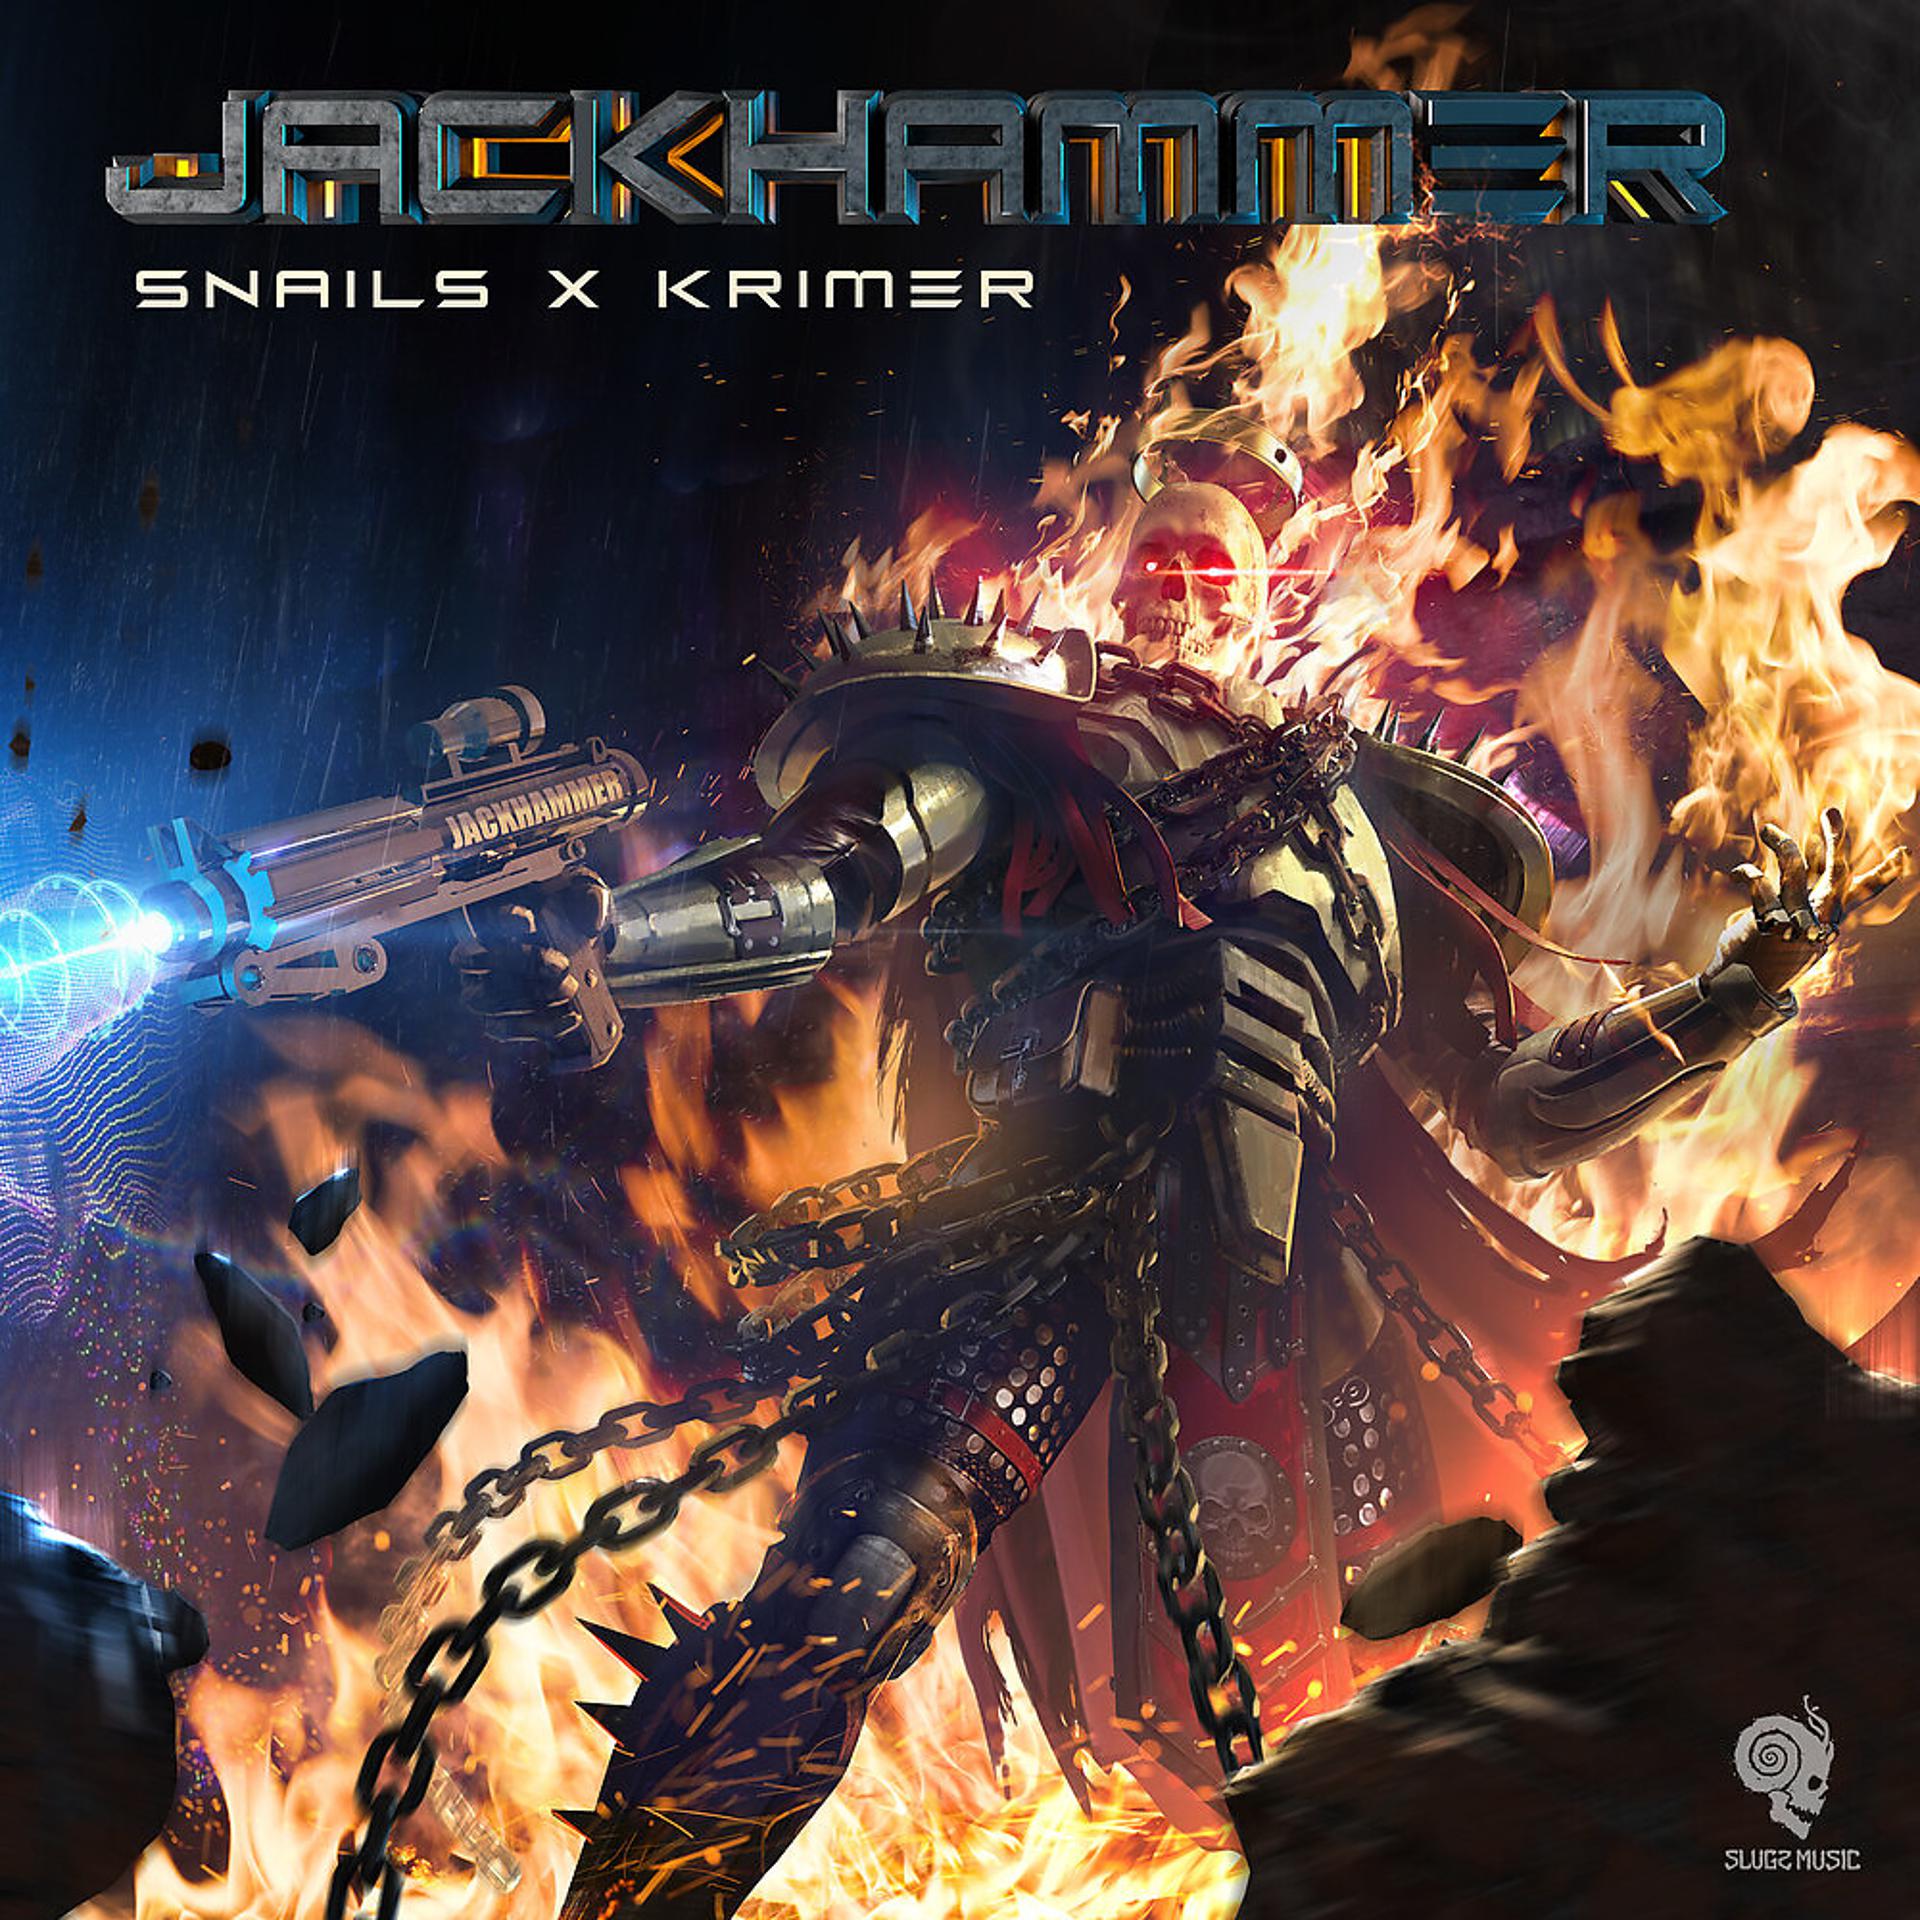 Постер альбома Jackhammer